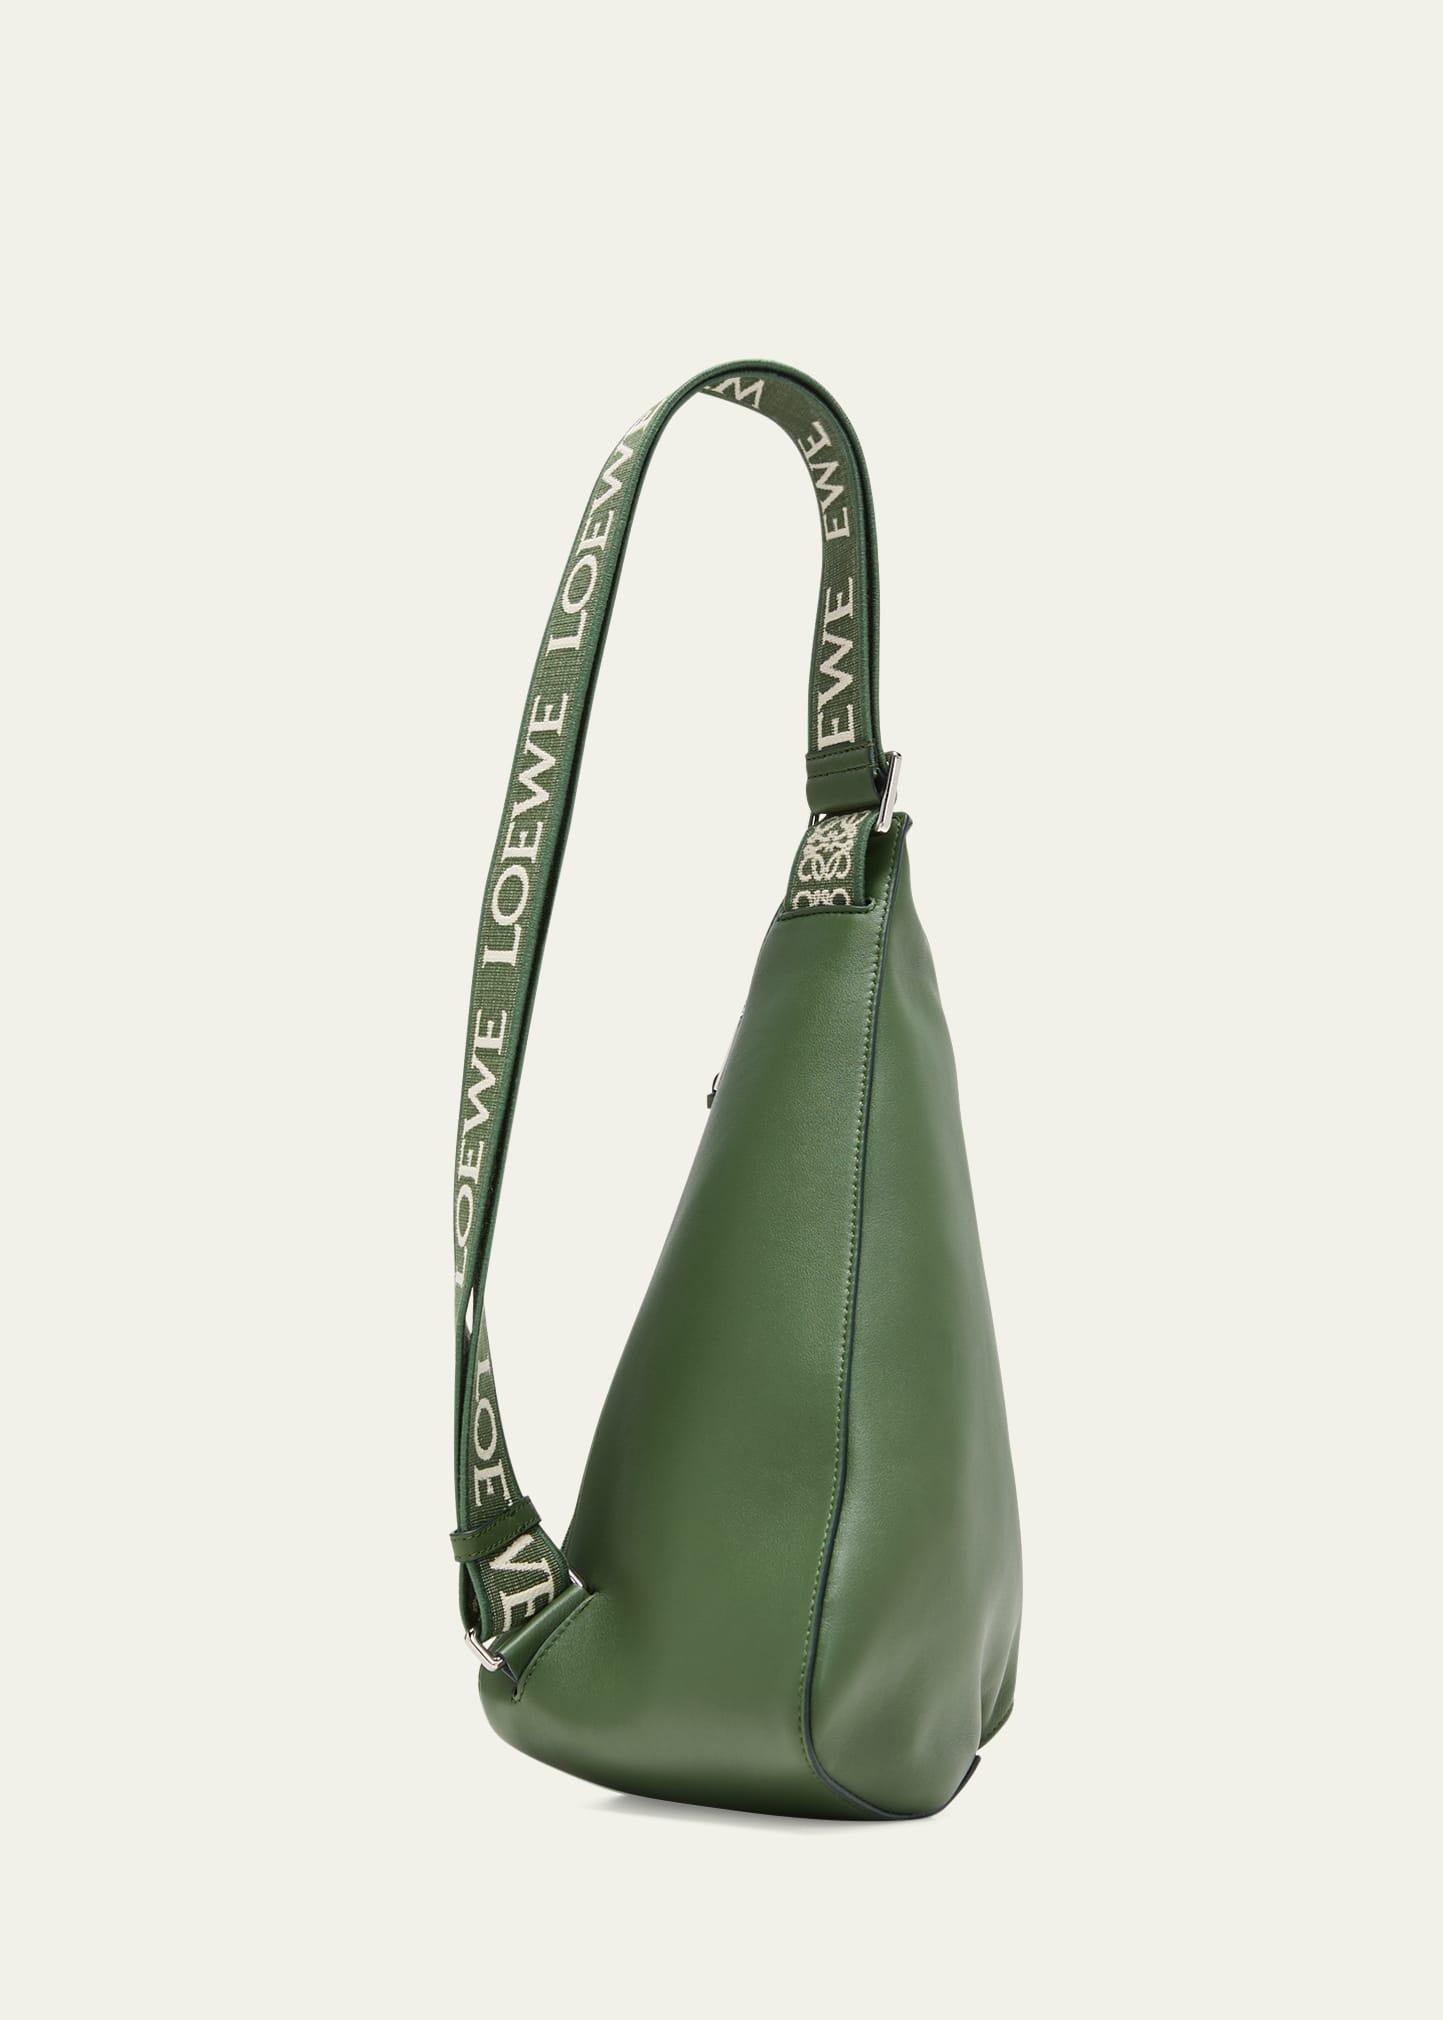 Loewe Anton Messenger Bag Leather Brown 2015171